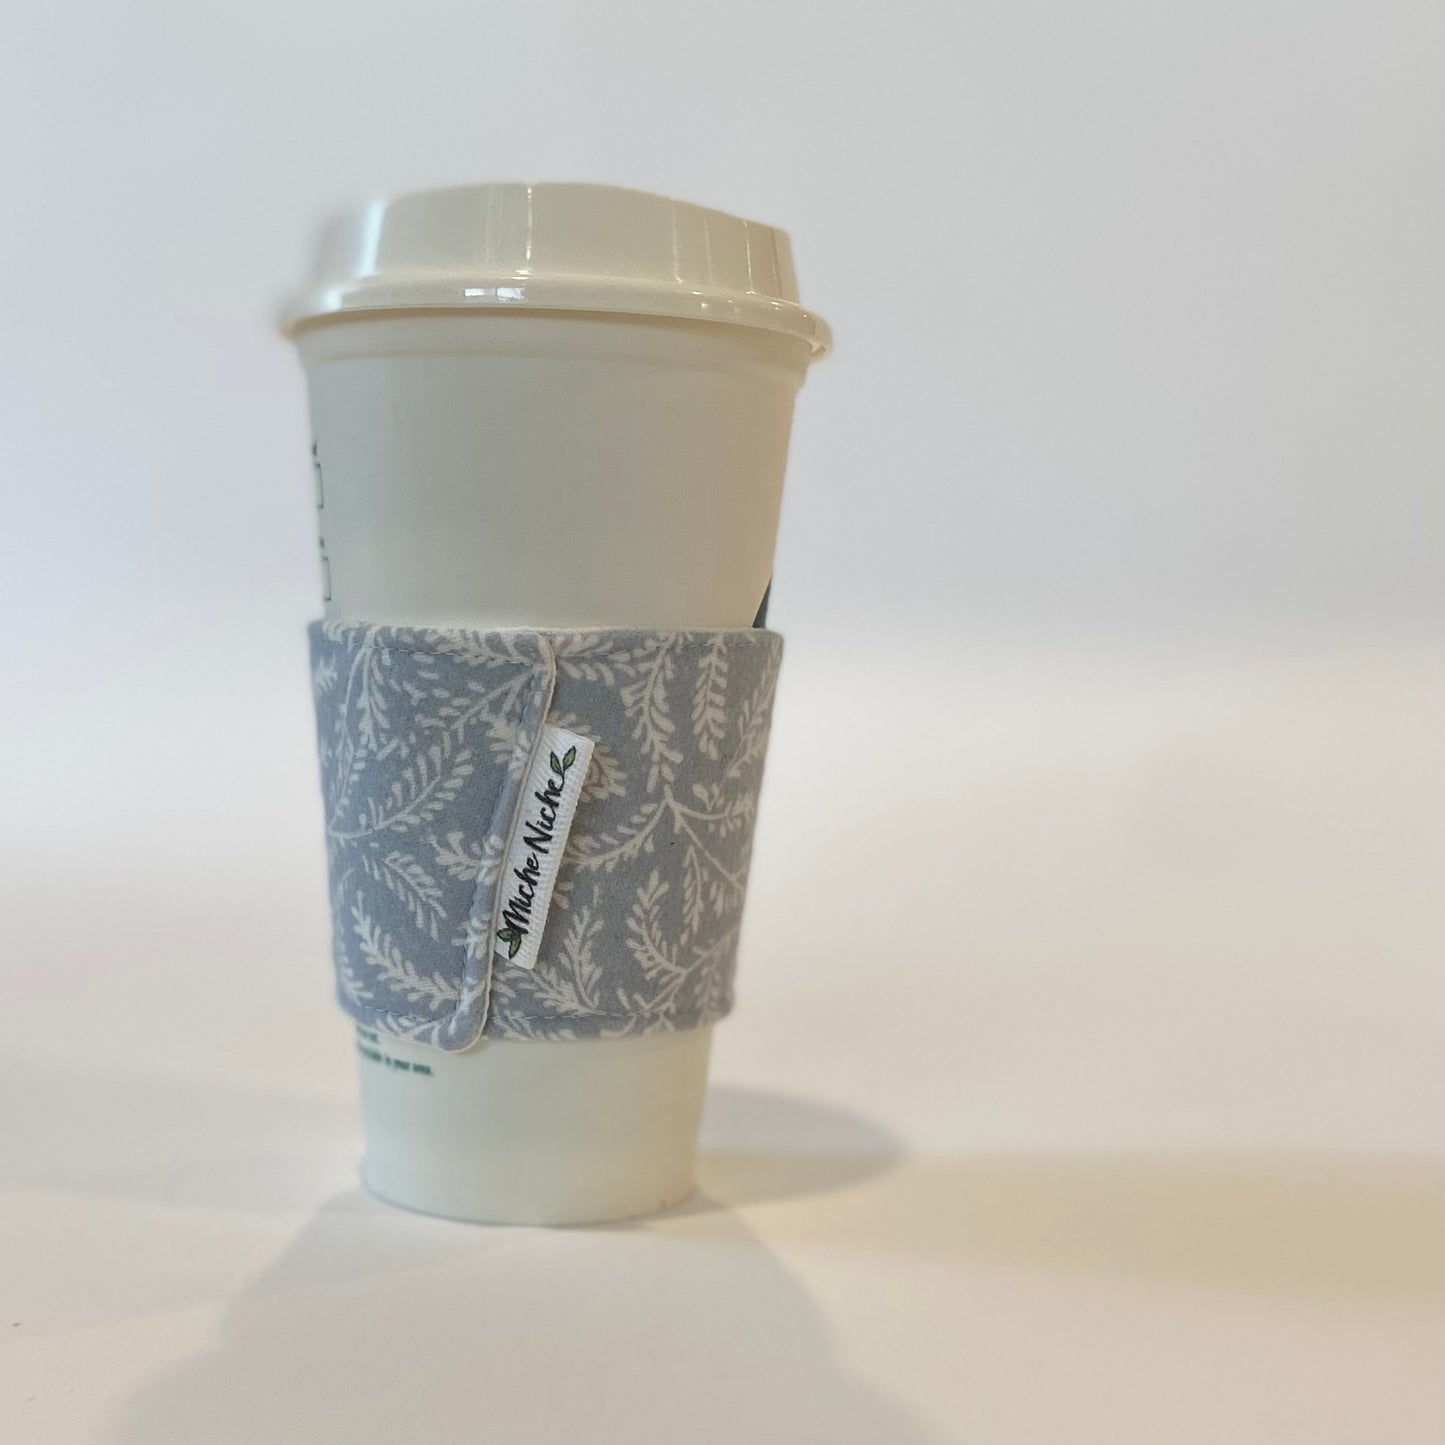 Reusable Coffee Cup Sleeve